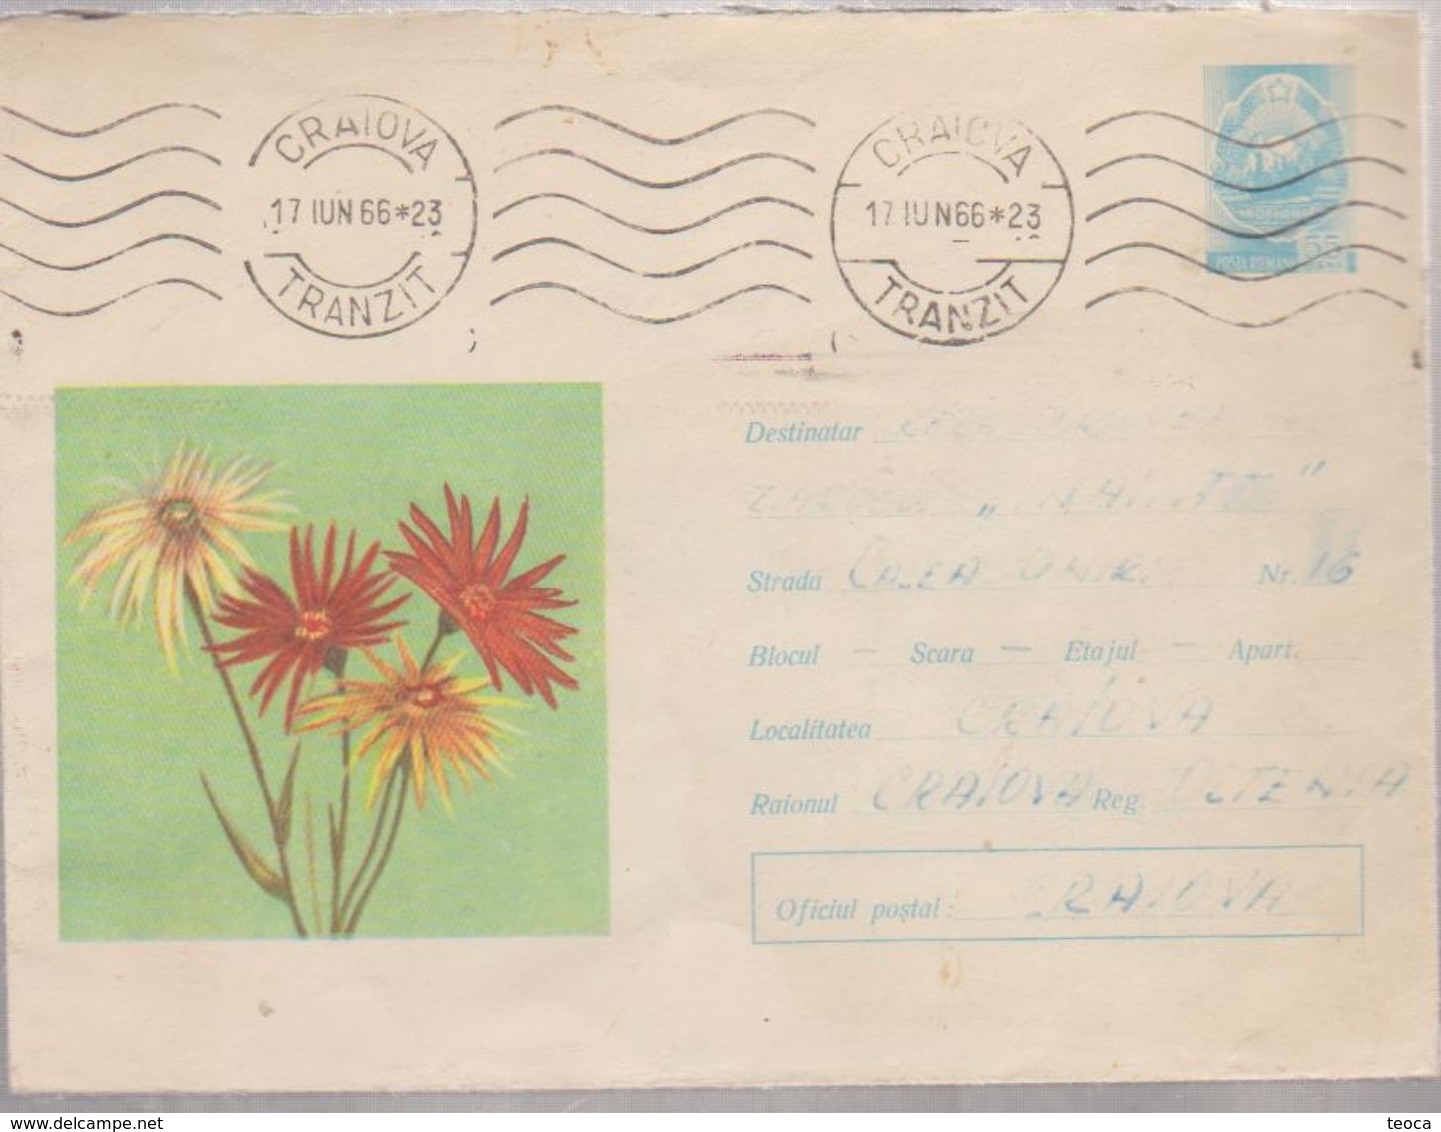 PLANT FLOWER, Cover Envelope ROMANIA 1966 COVER STATIONERY,POSTAL STATIONERY ROMANIA 1966, CANCEL  CRAIOVA - Storia Postale